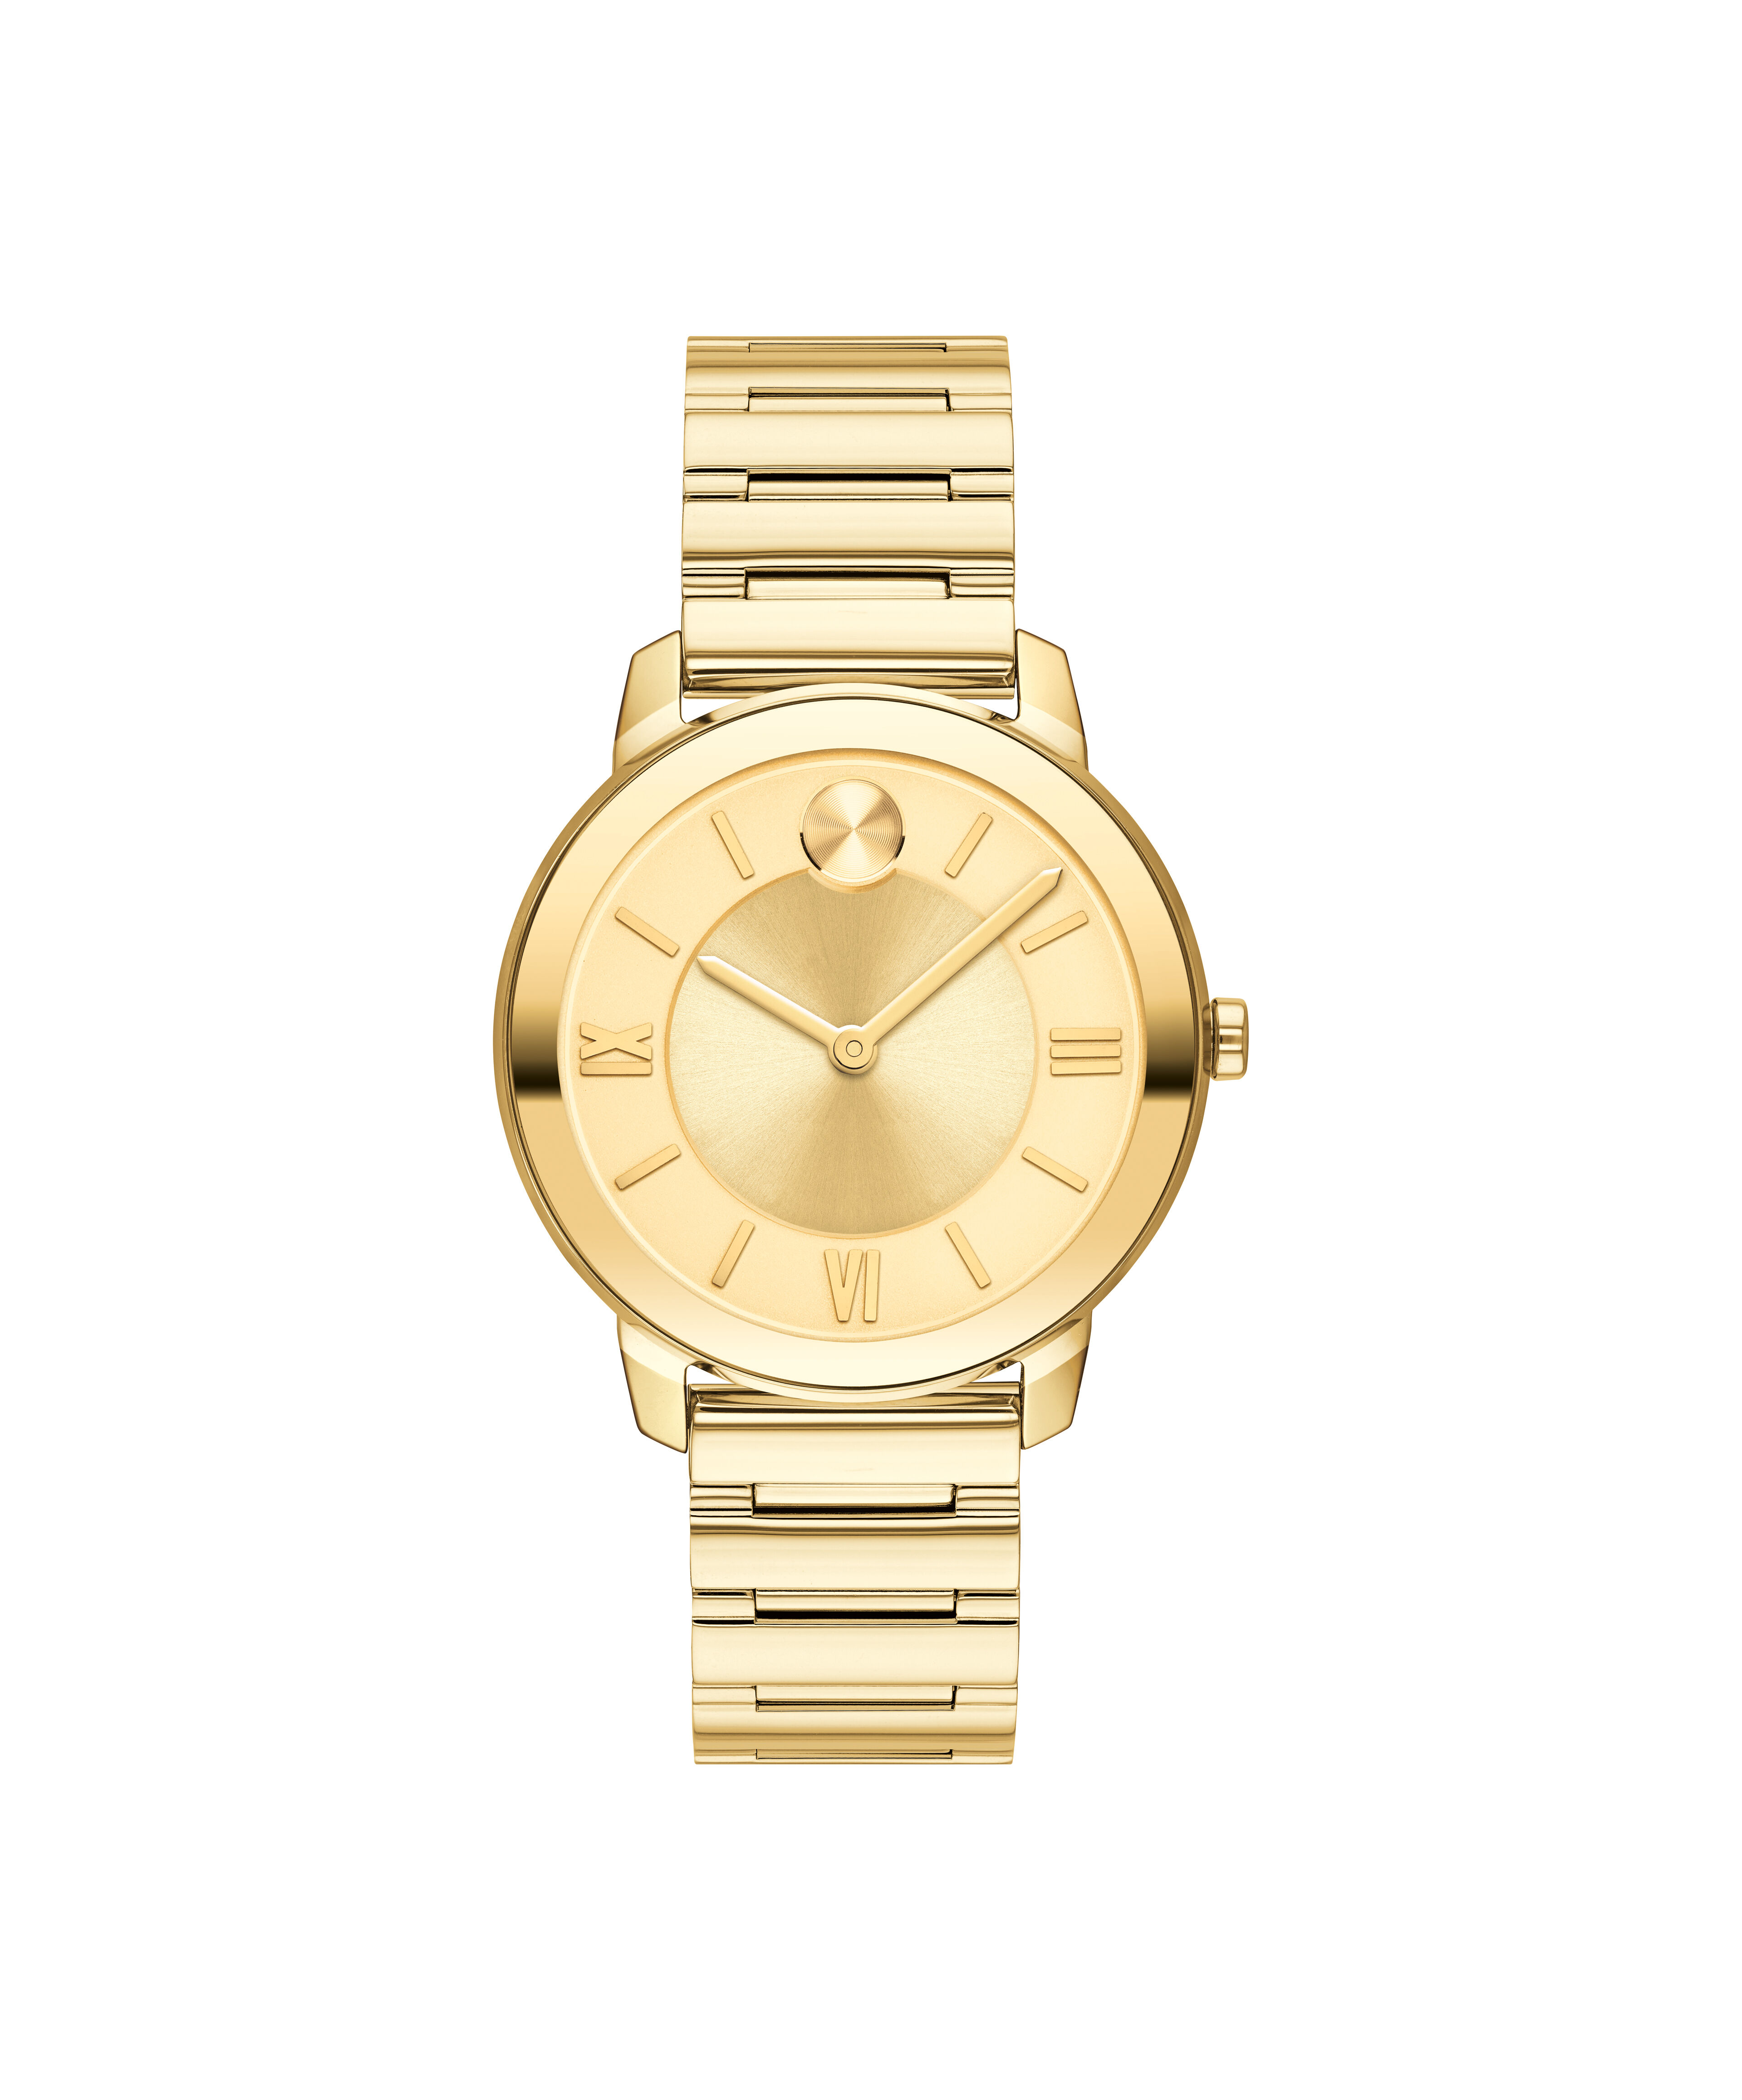 Rolex Replica Lady Watches